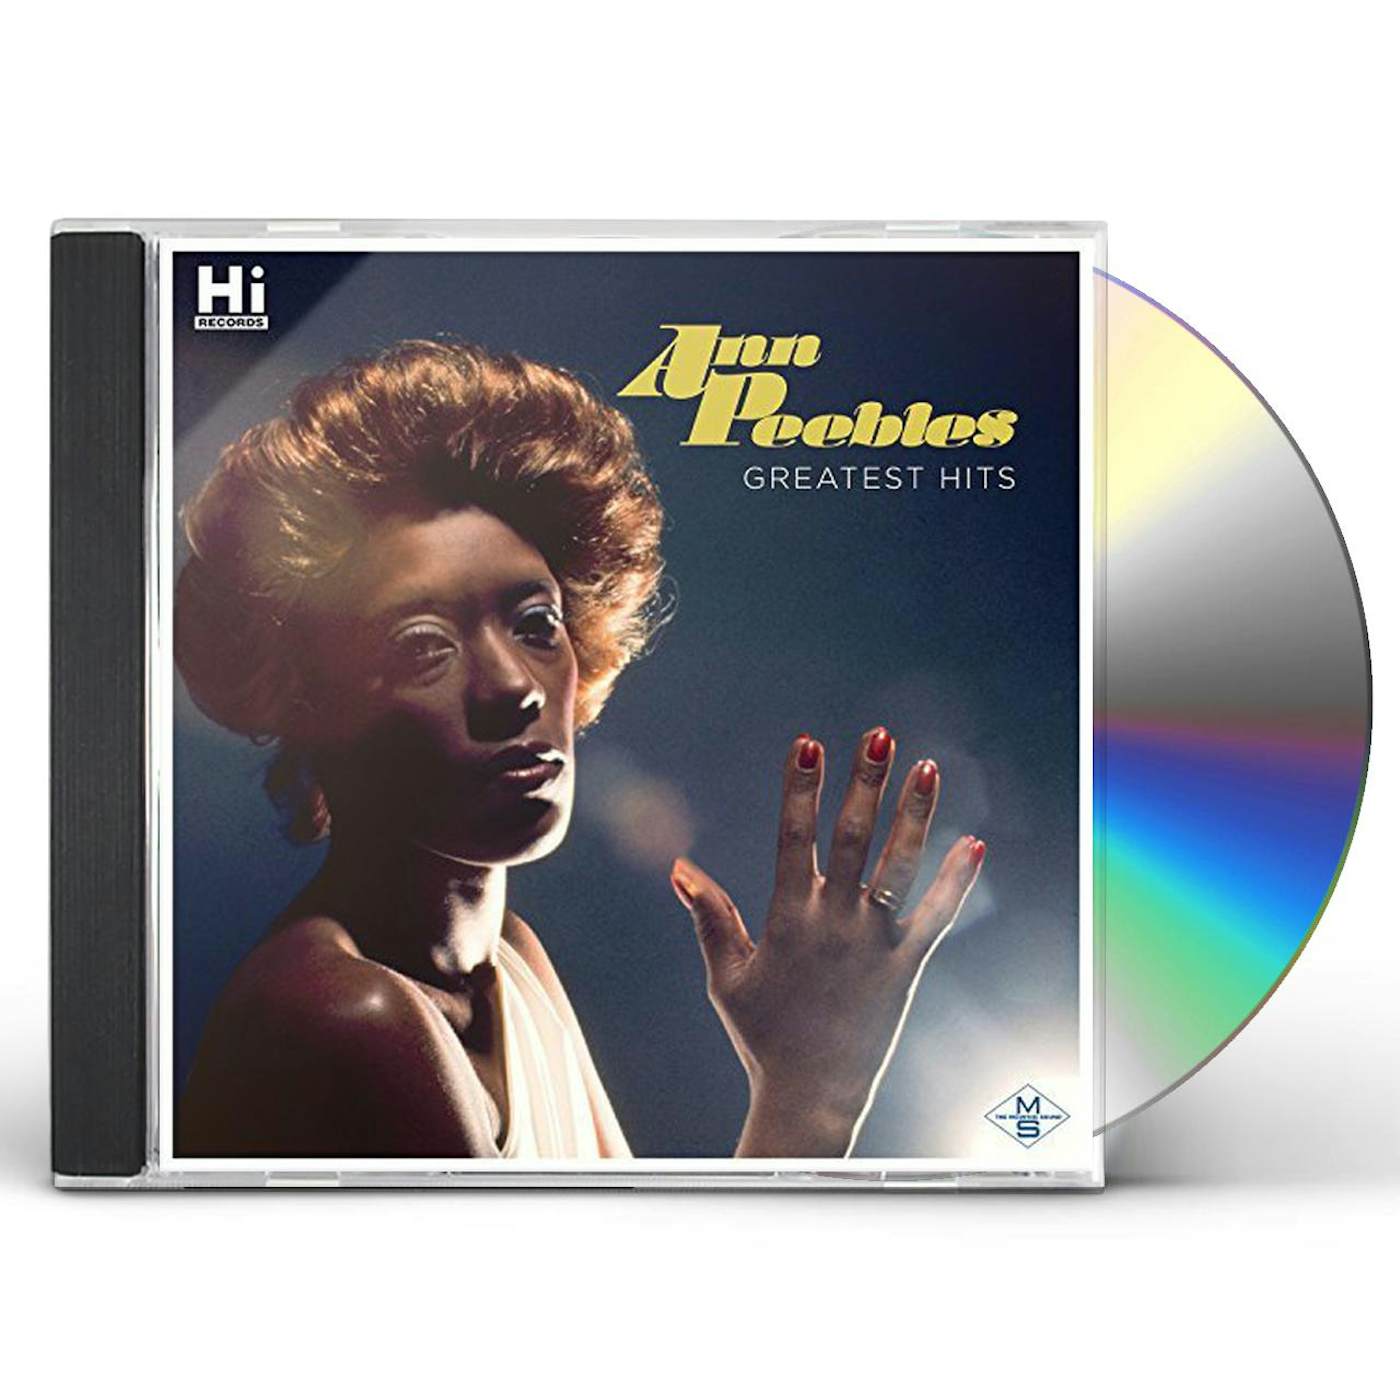 Ann Peebles GREATEST HITS CD